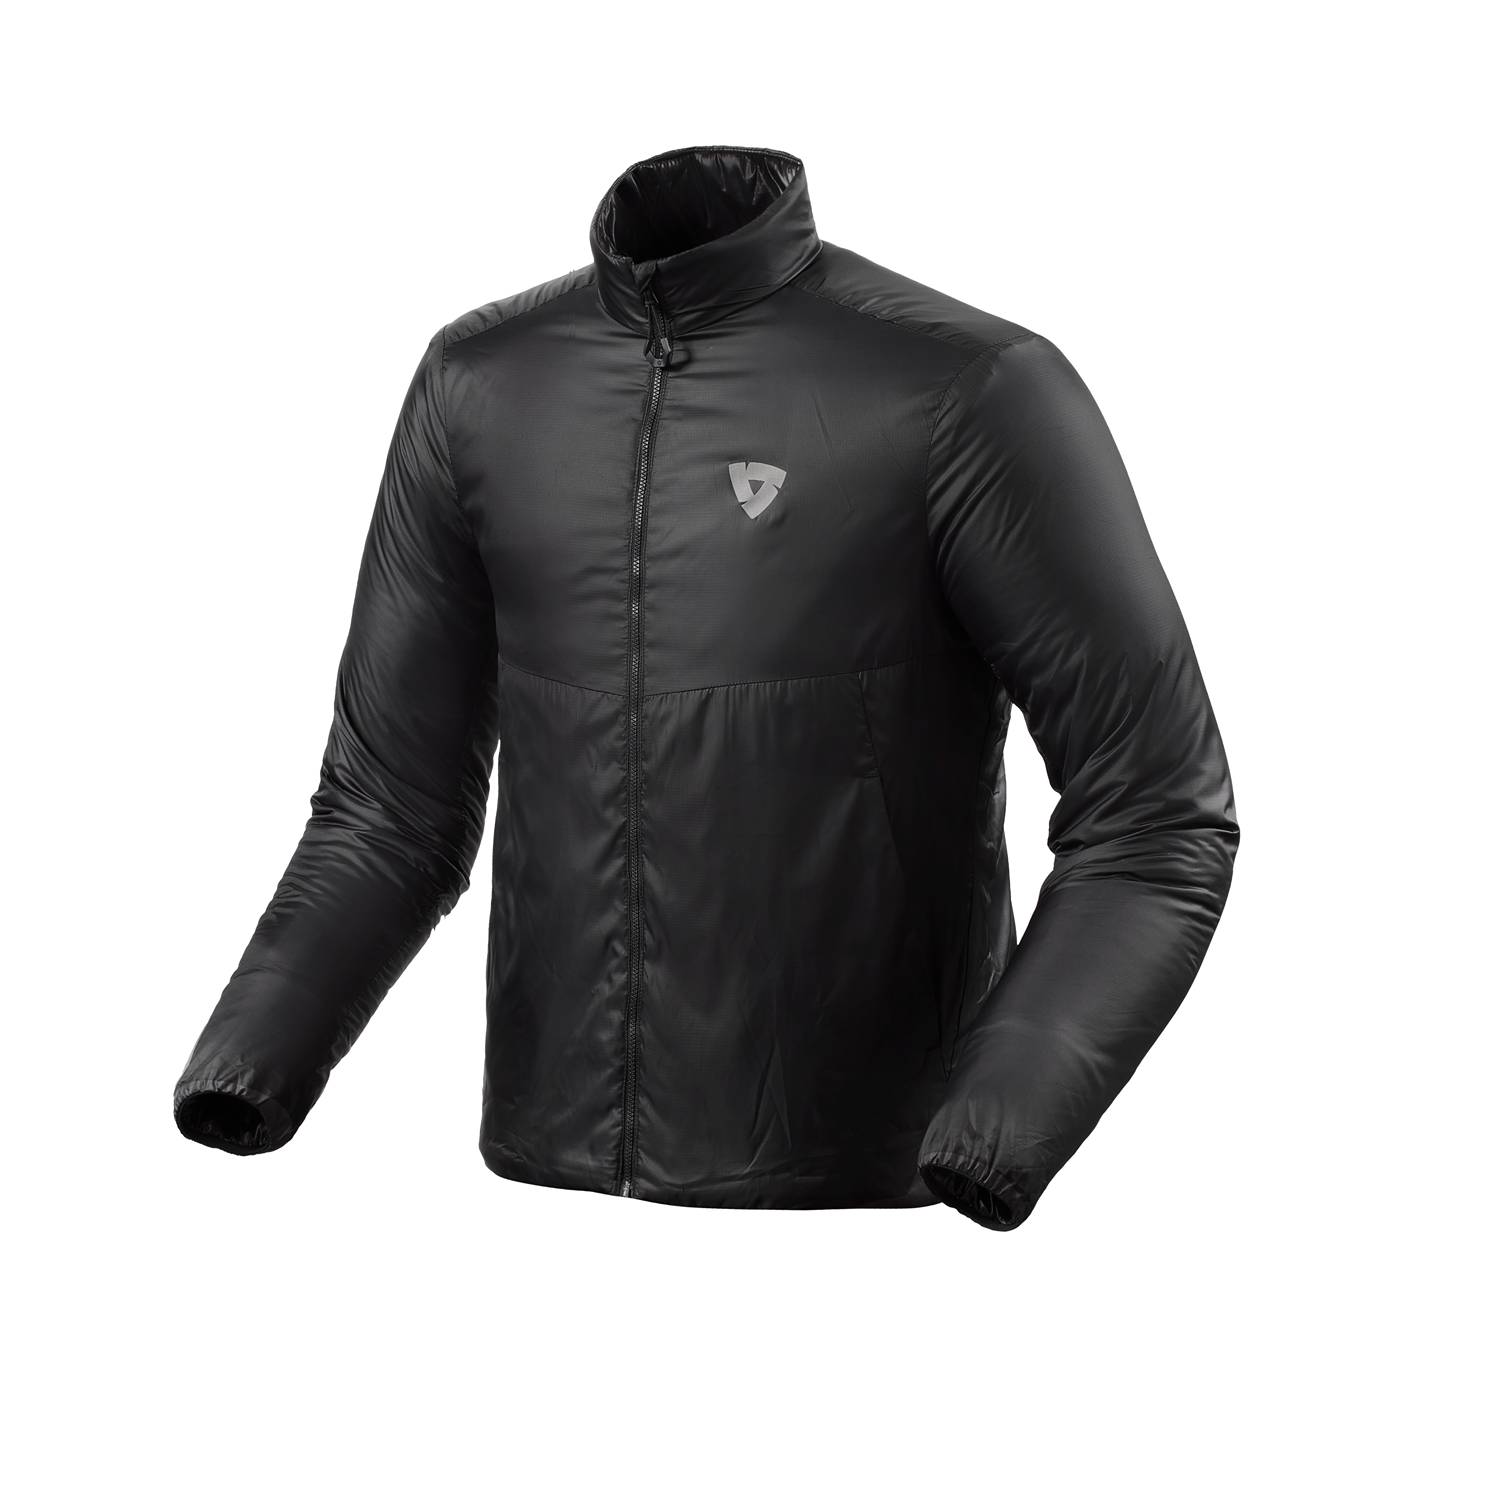 Image of REV'IT! Core 2 Mid Layer Jacket Black Size 2XL EN